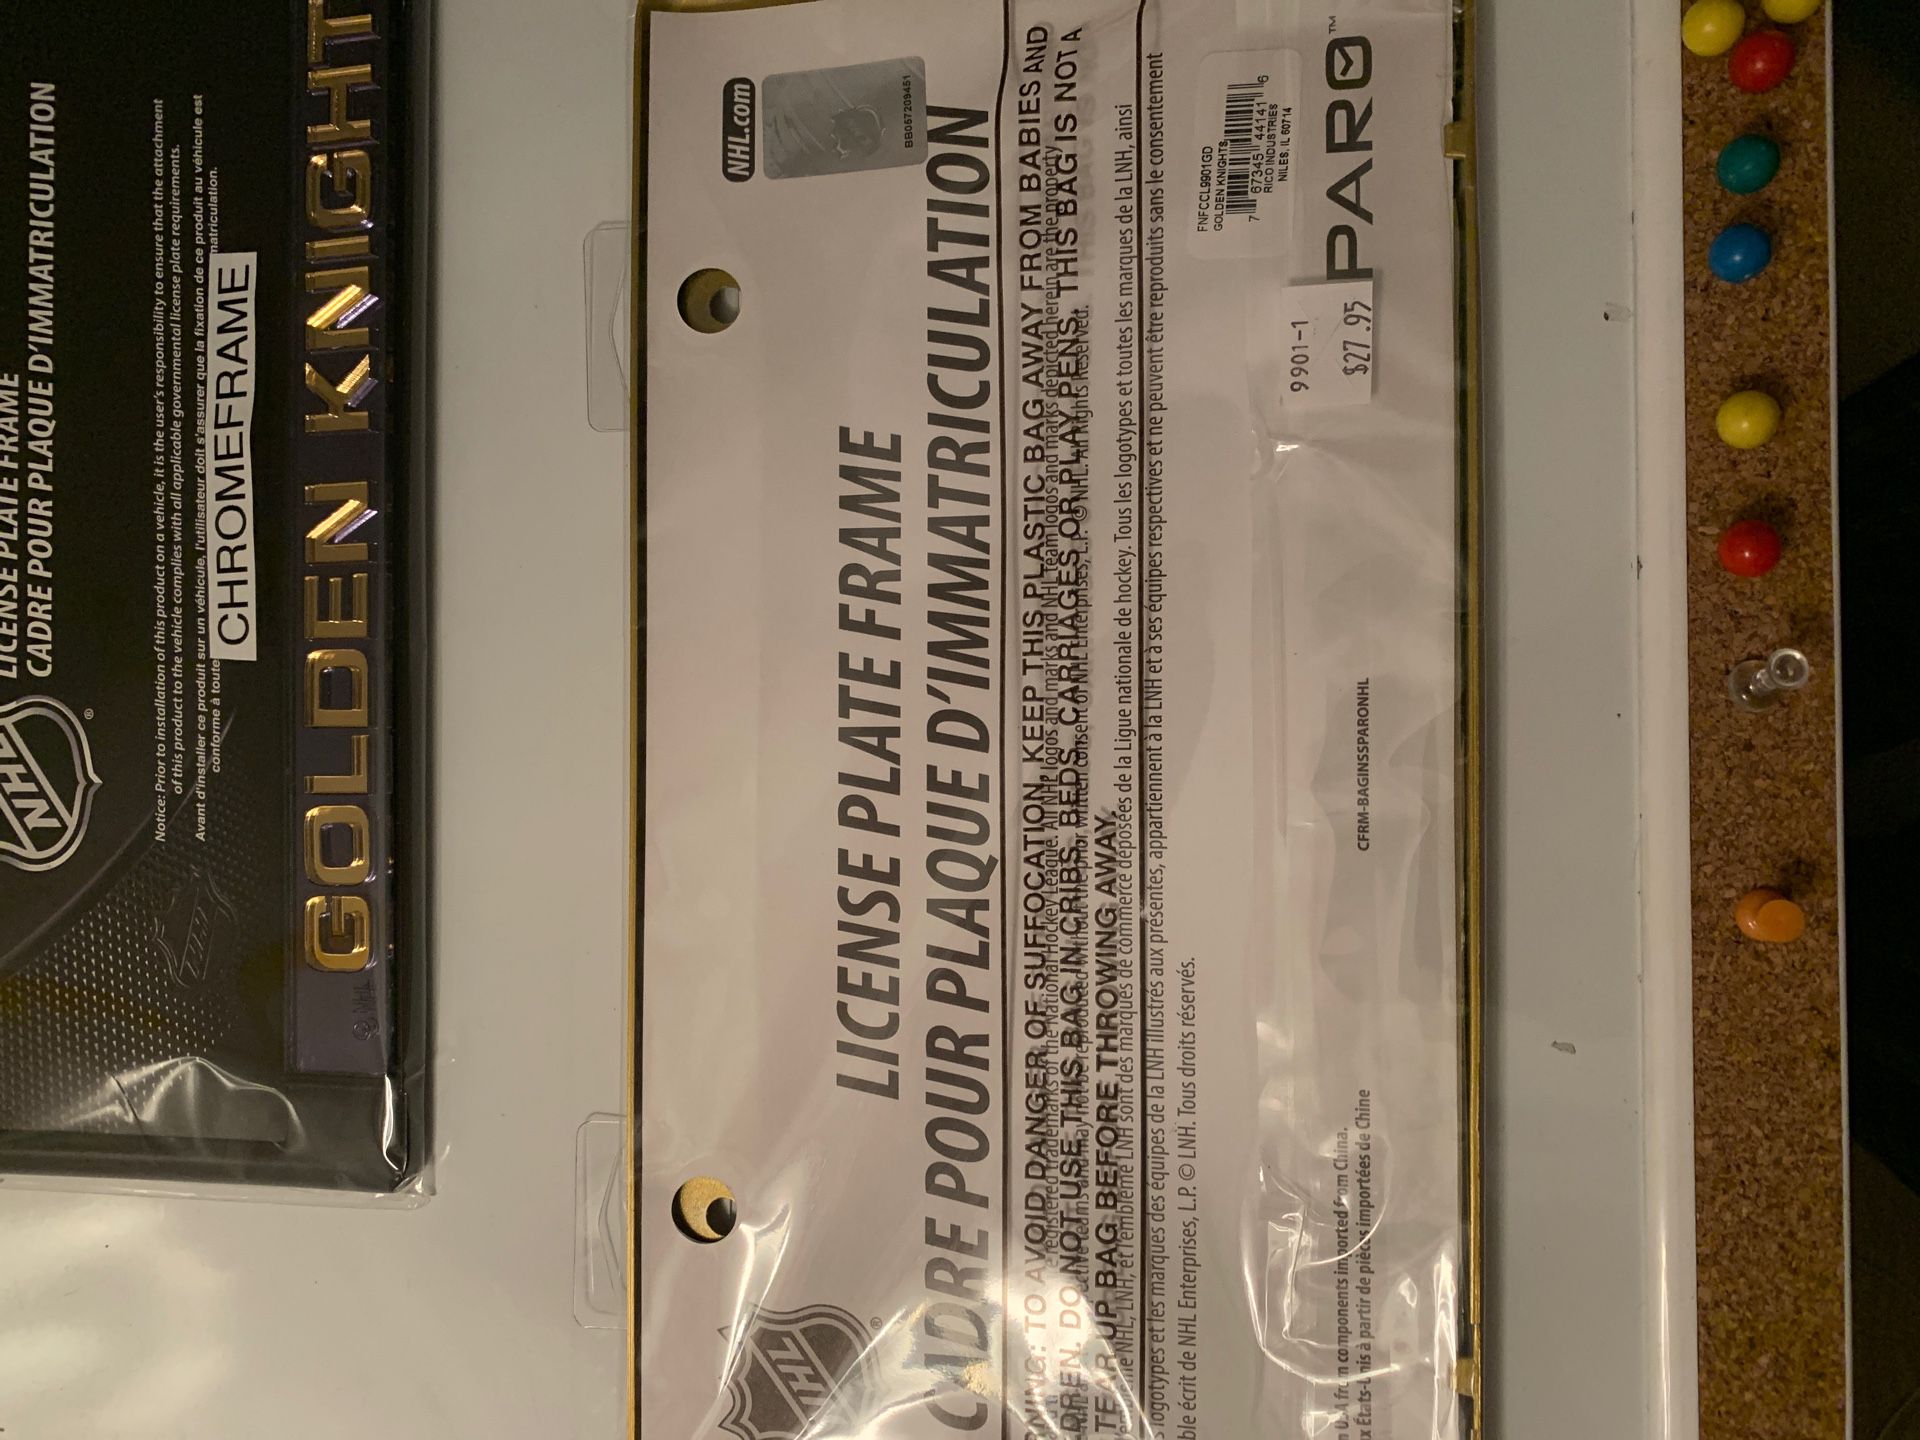 NHL Las Vegas Golden Knights Prime Plastic License Plate Frame 